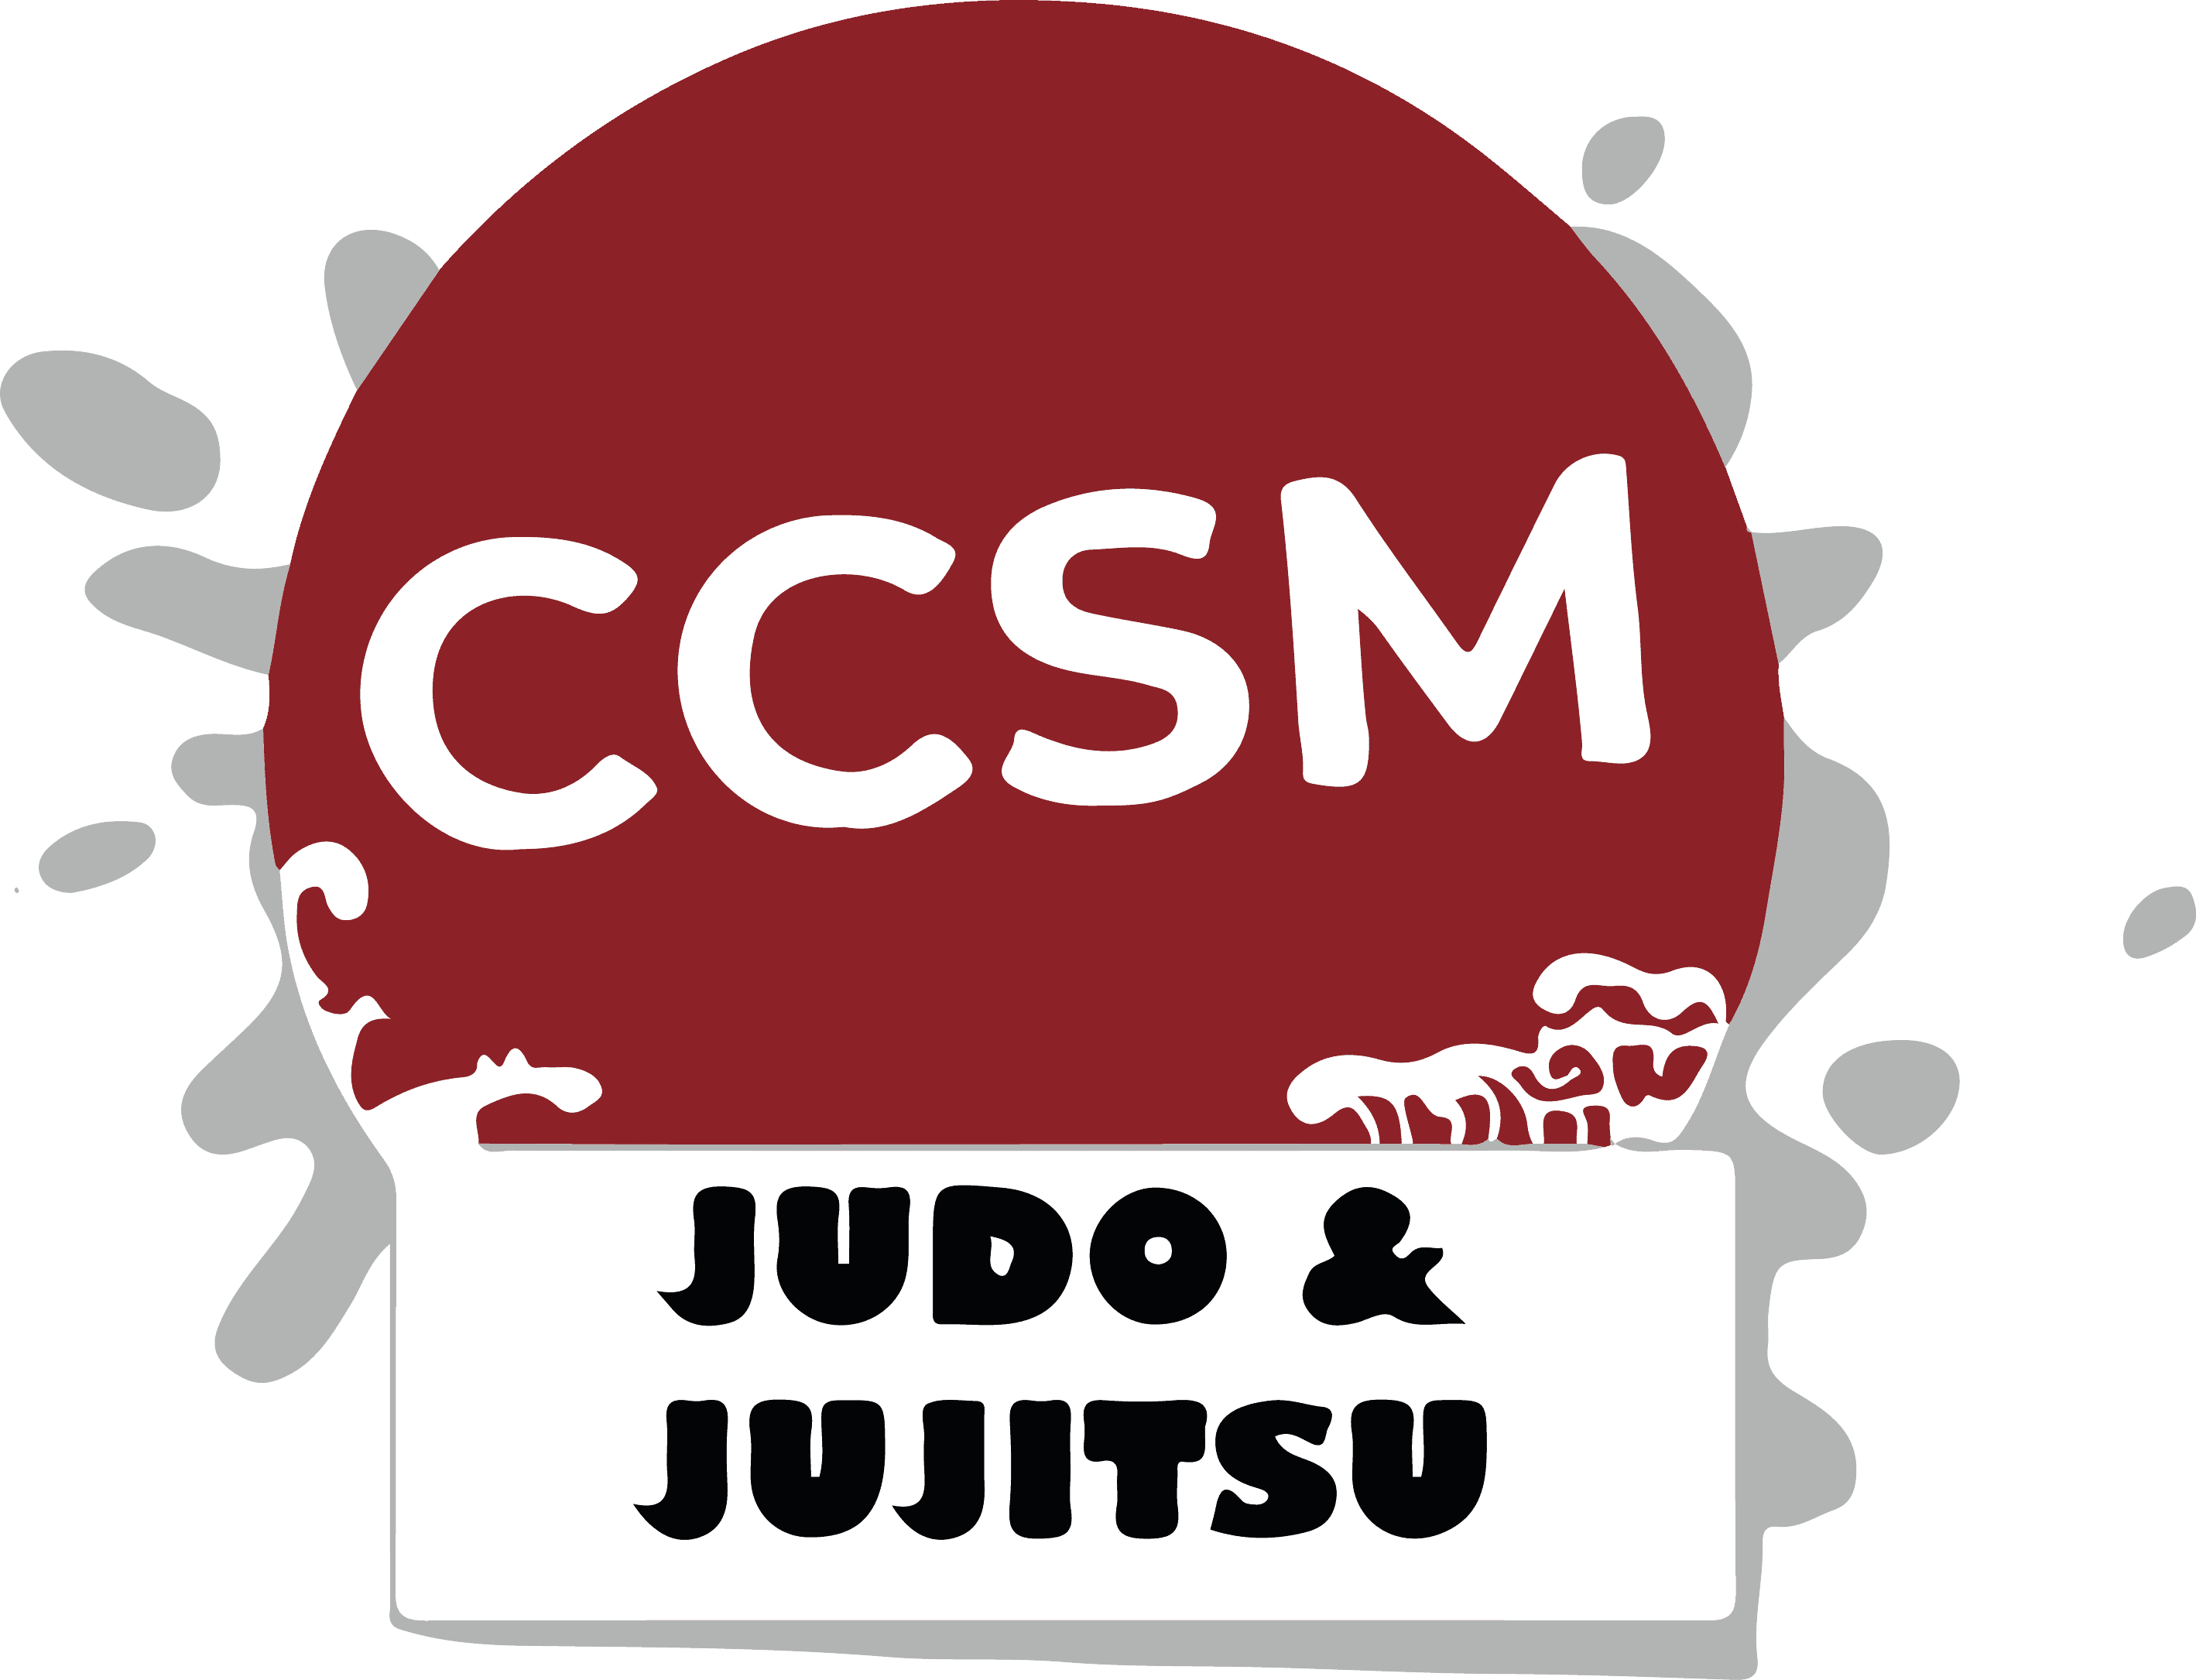 CCSM